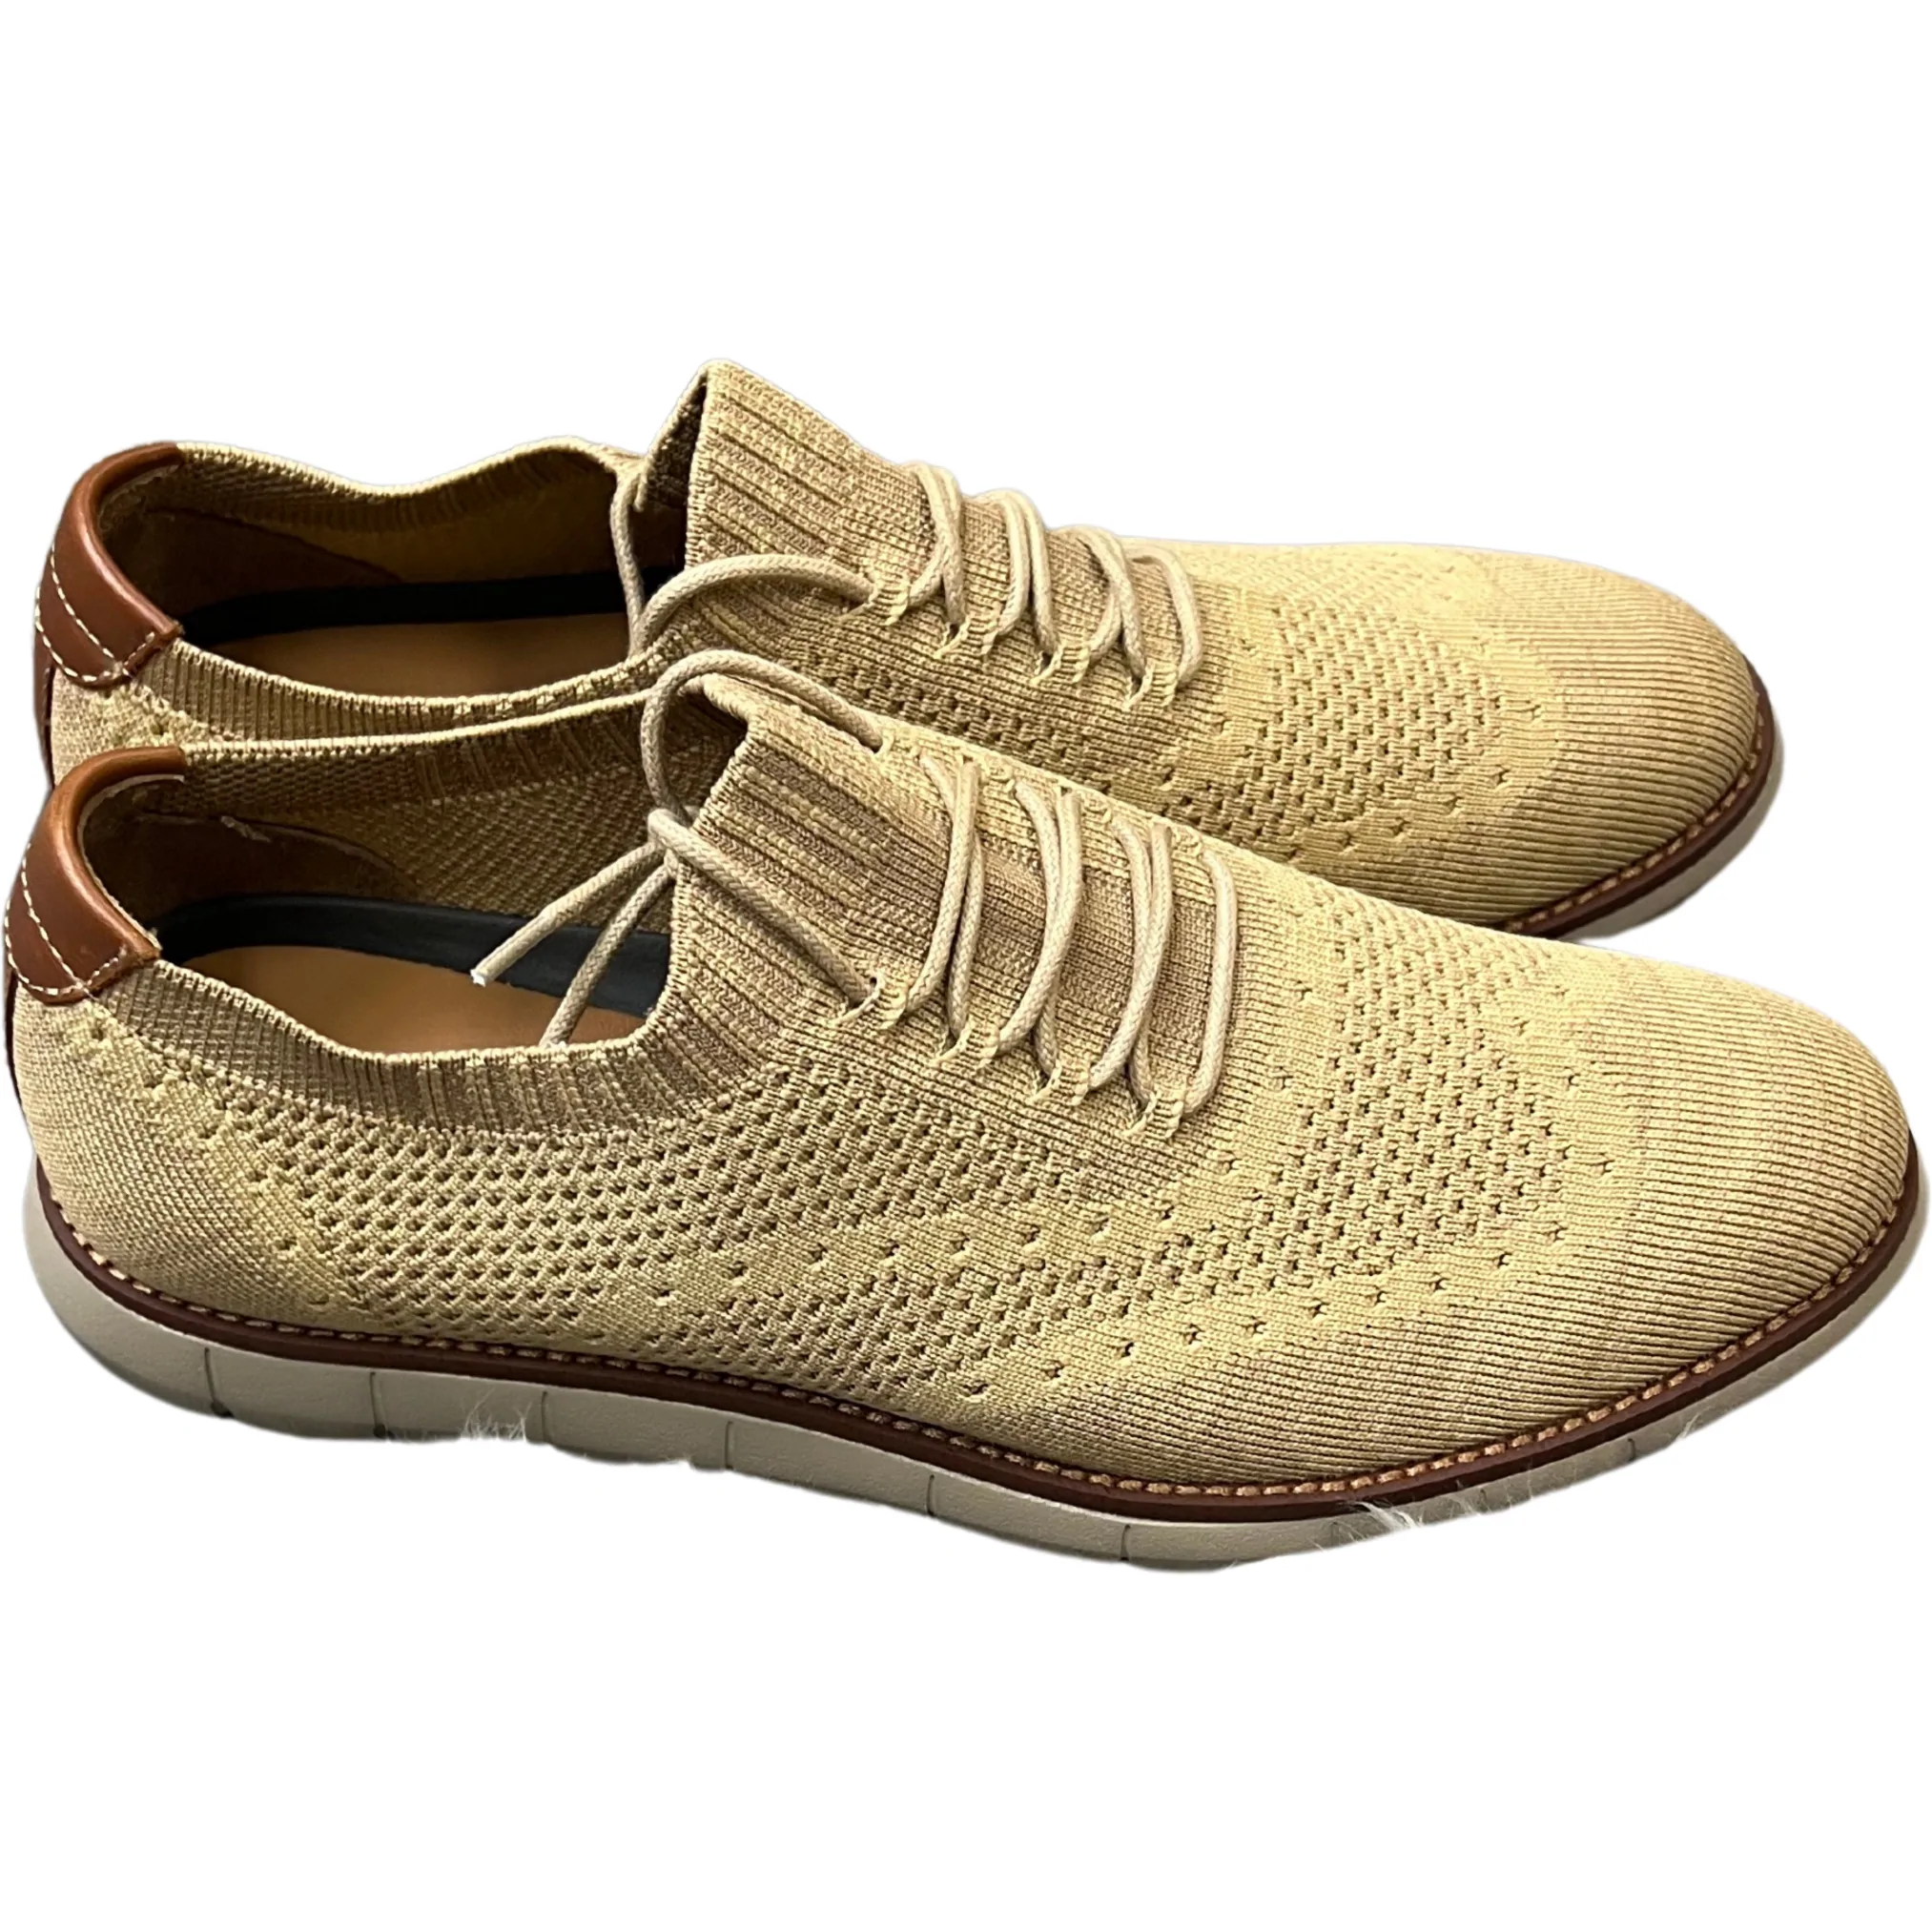 Johnston & Murphy / Knit Wingtip Shoes / Holden / Beige / Various Sizes